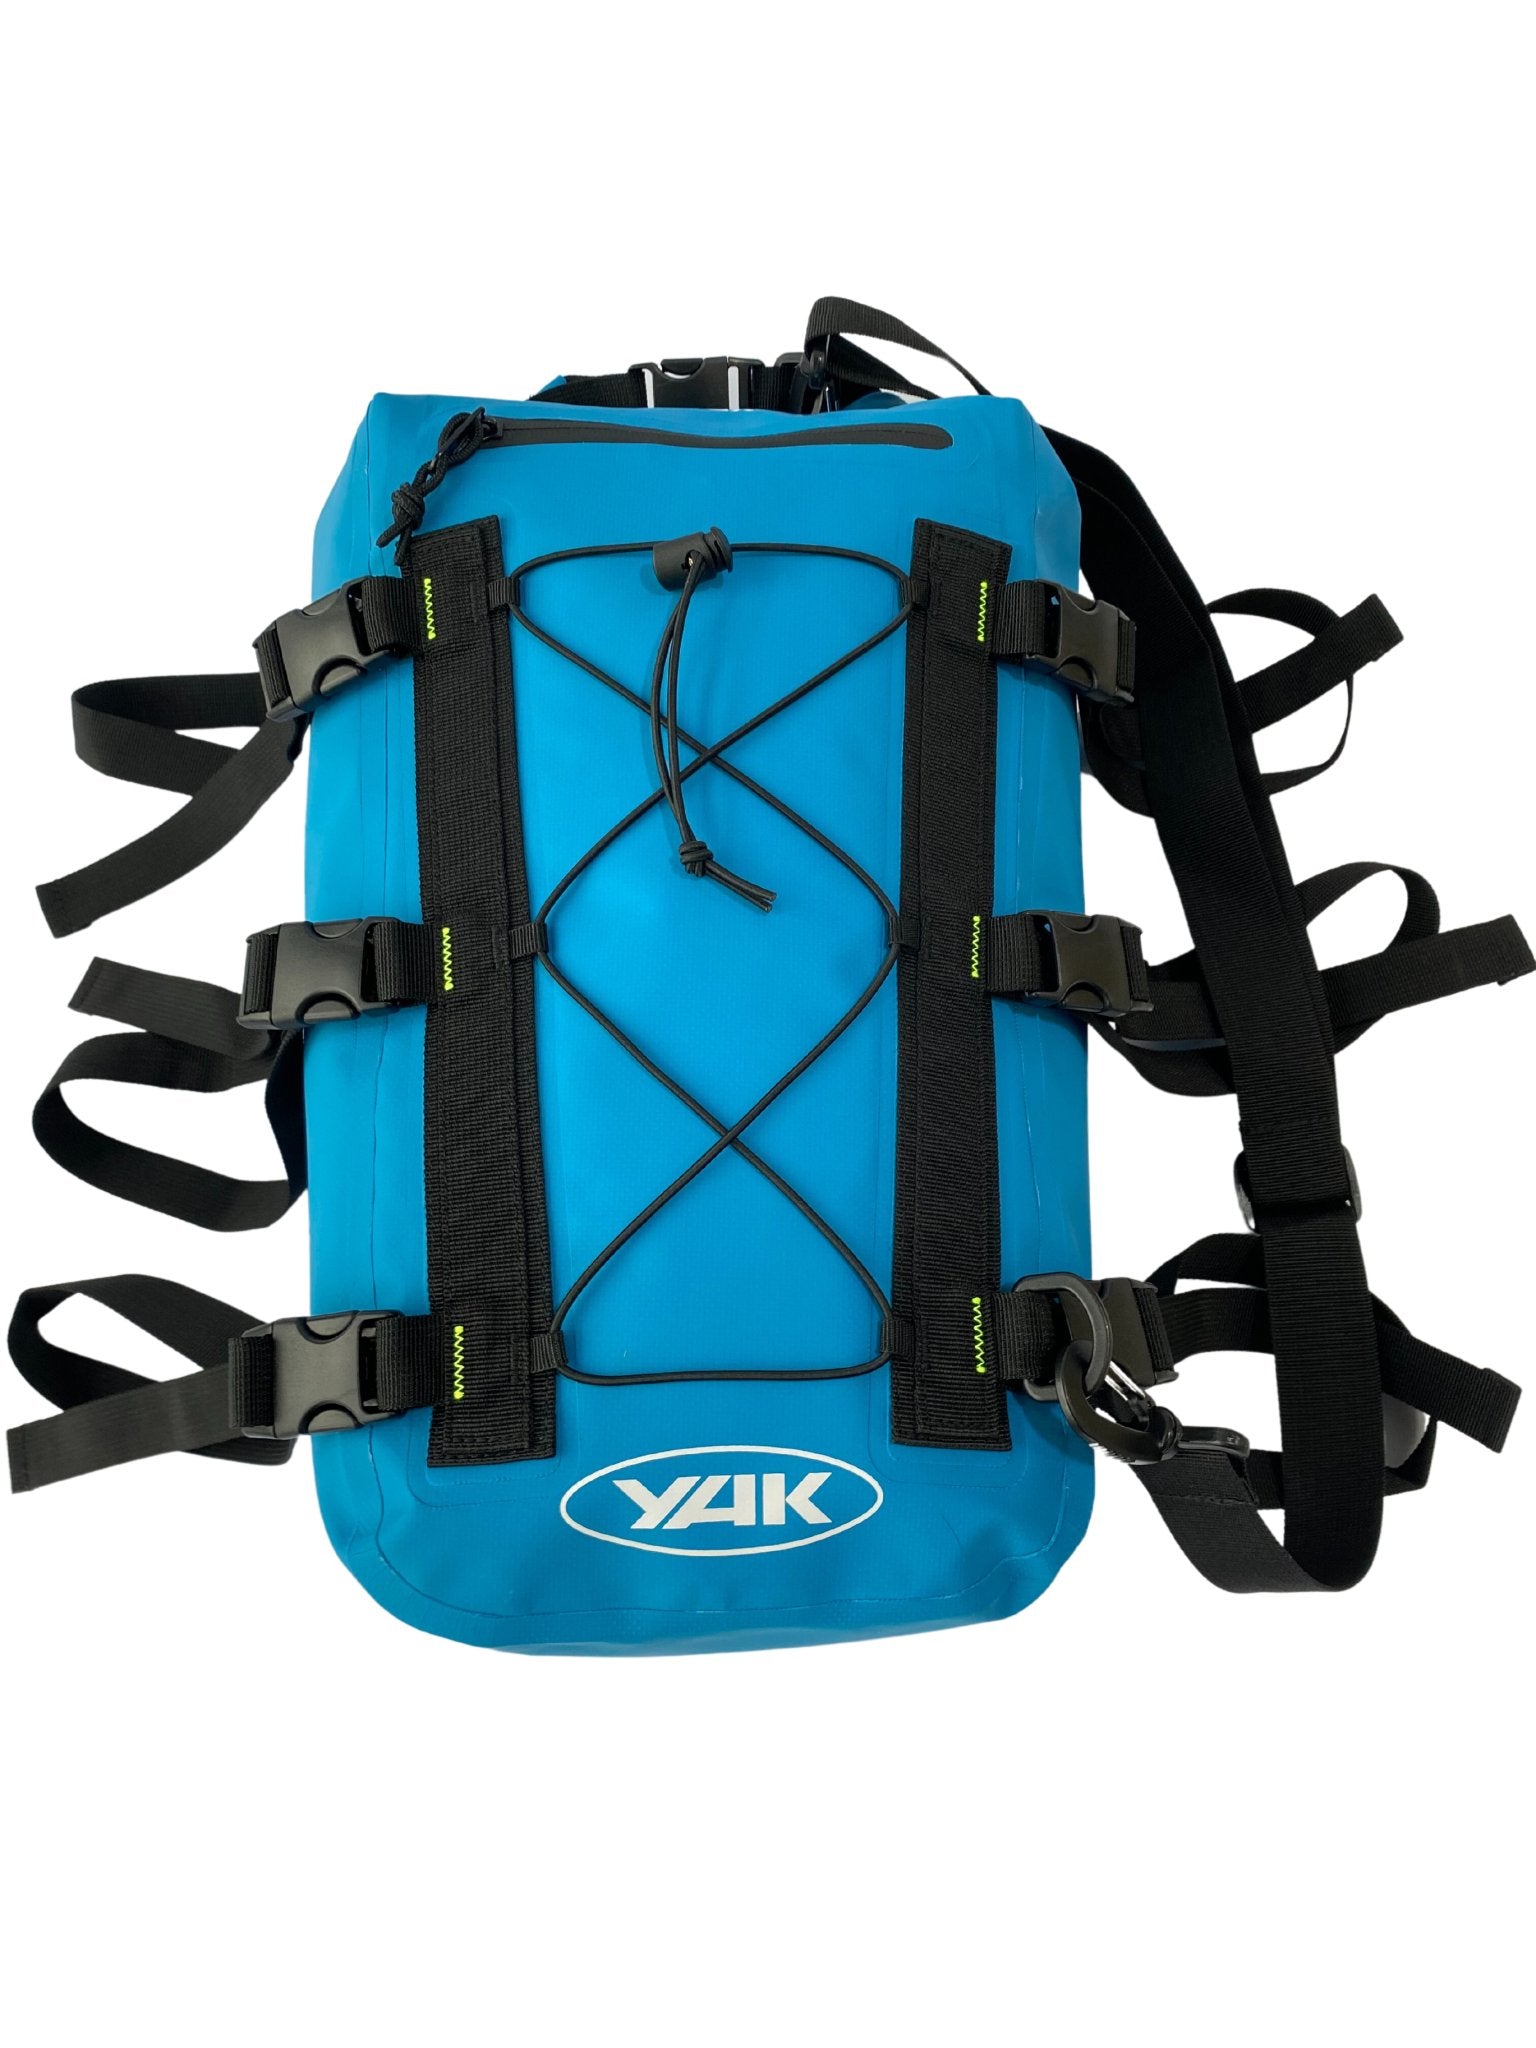 YAK Deck Dry Bag 20L - Worthing Watersports - 7003342 - Dry Bags - YAK